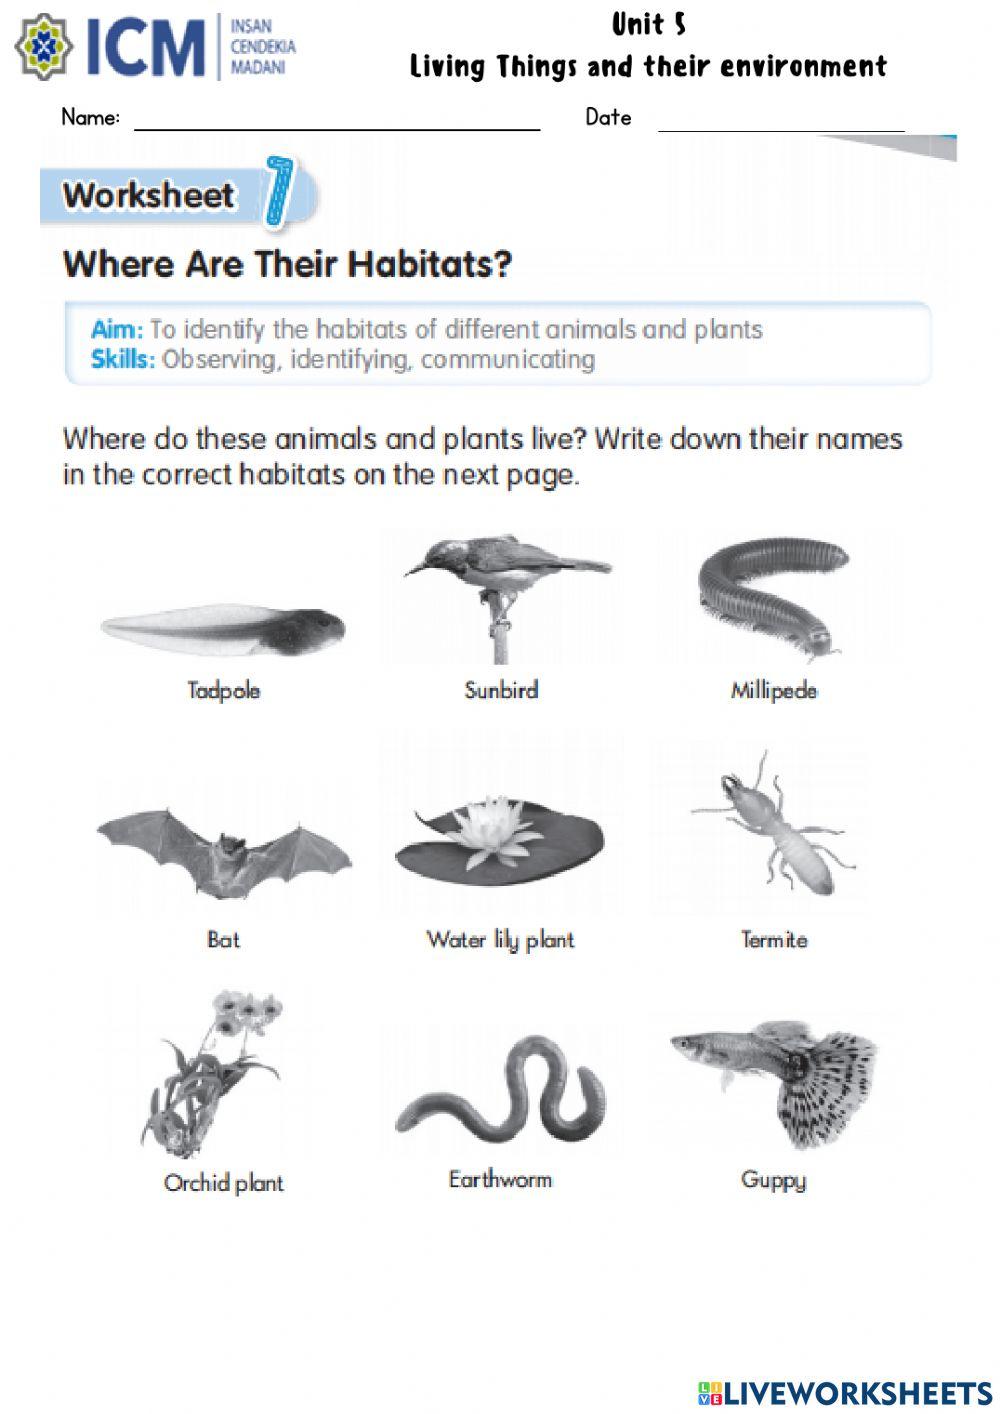 Where Are Their Habitat?